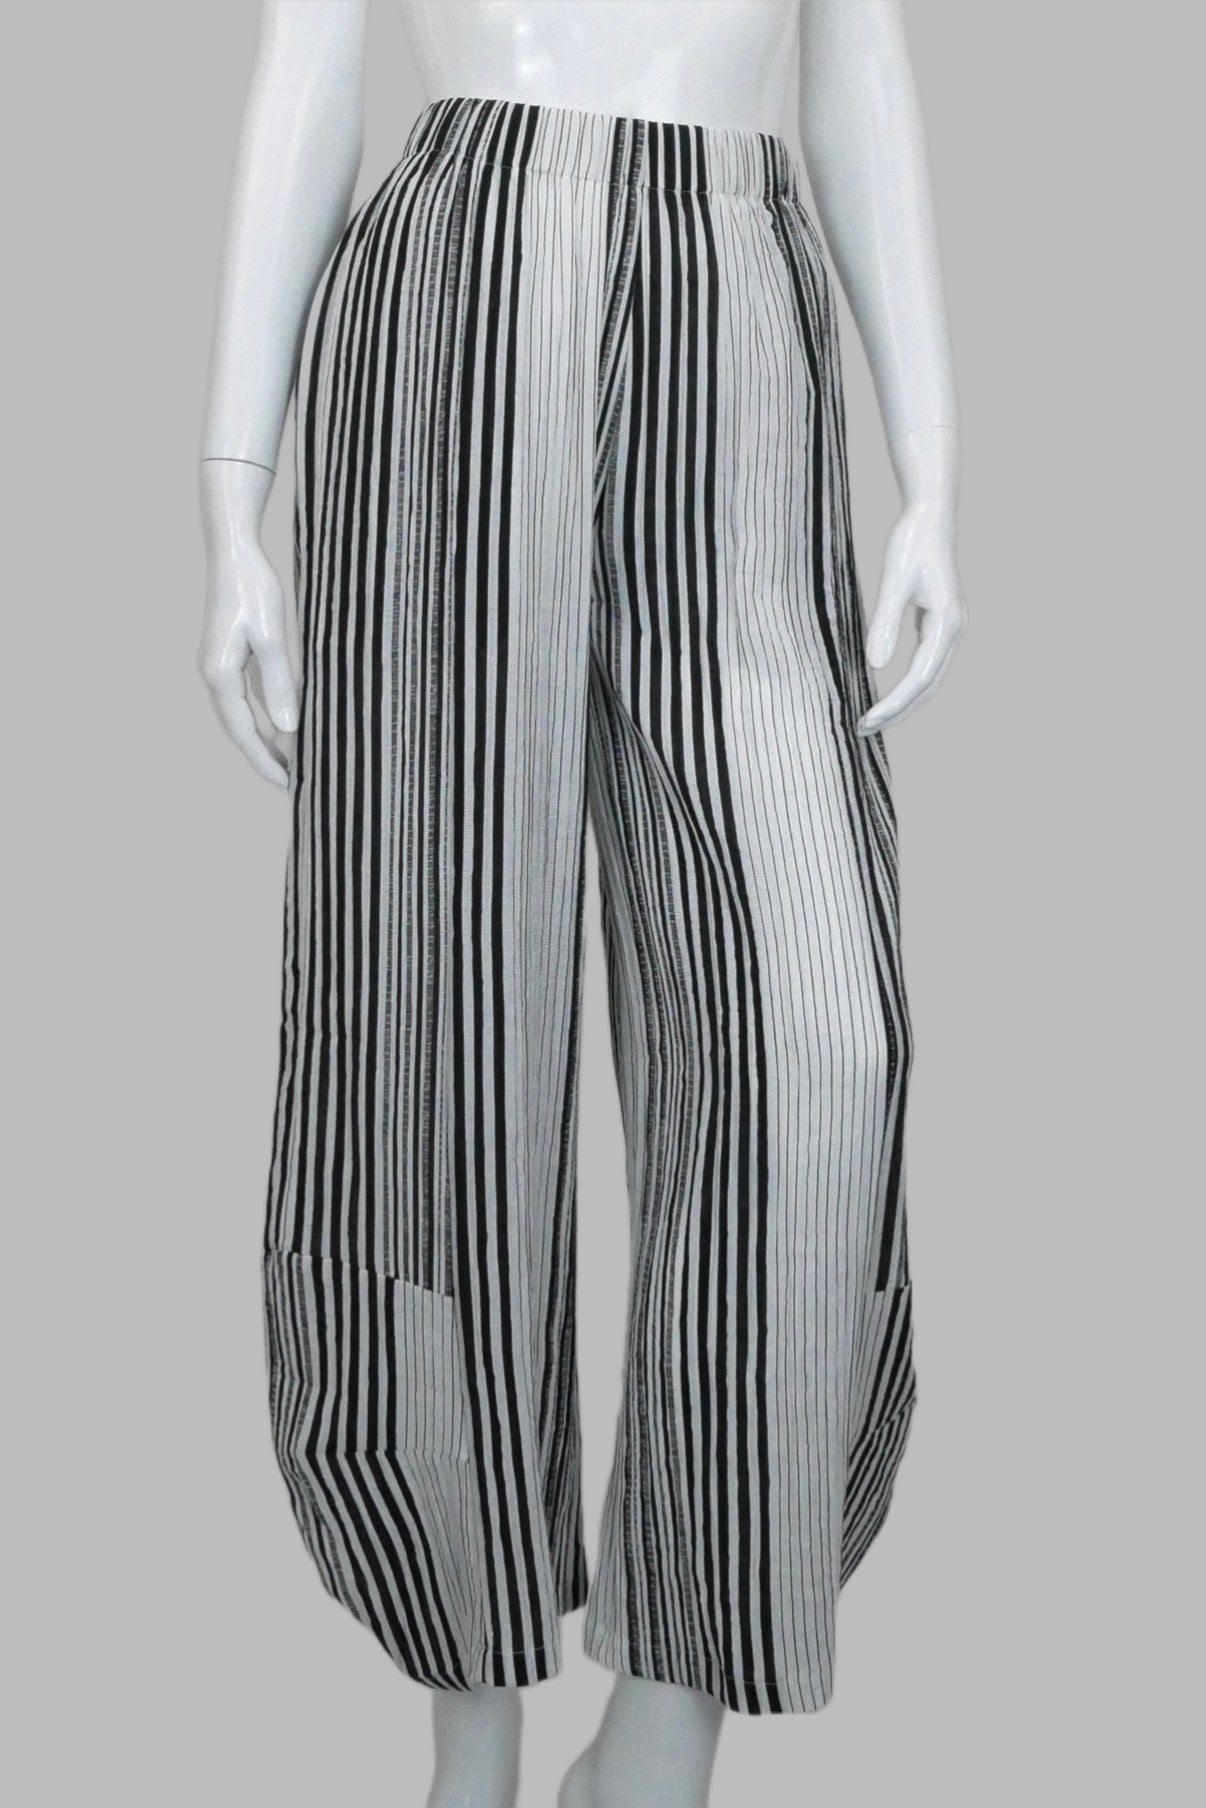 090- Radzoli White and Black Lines Pants